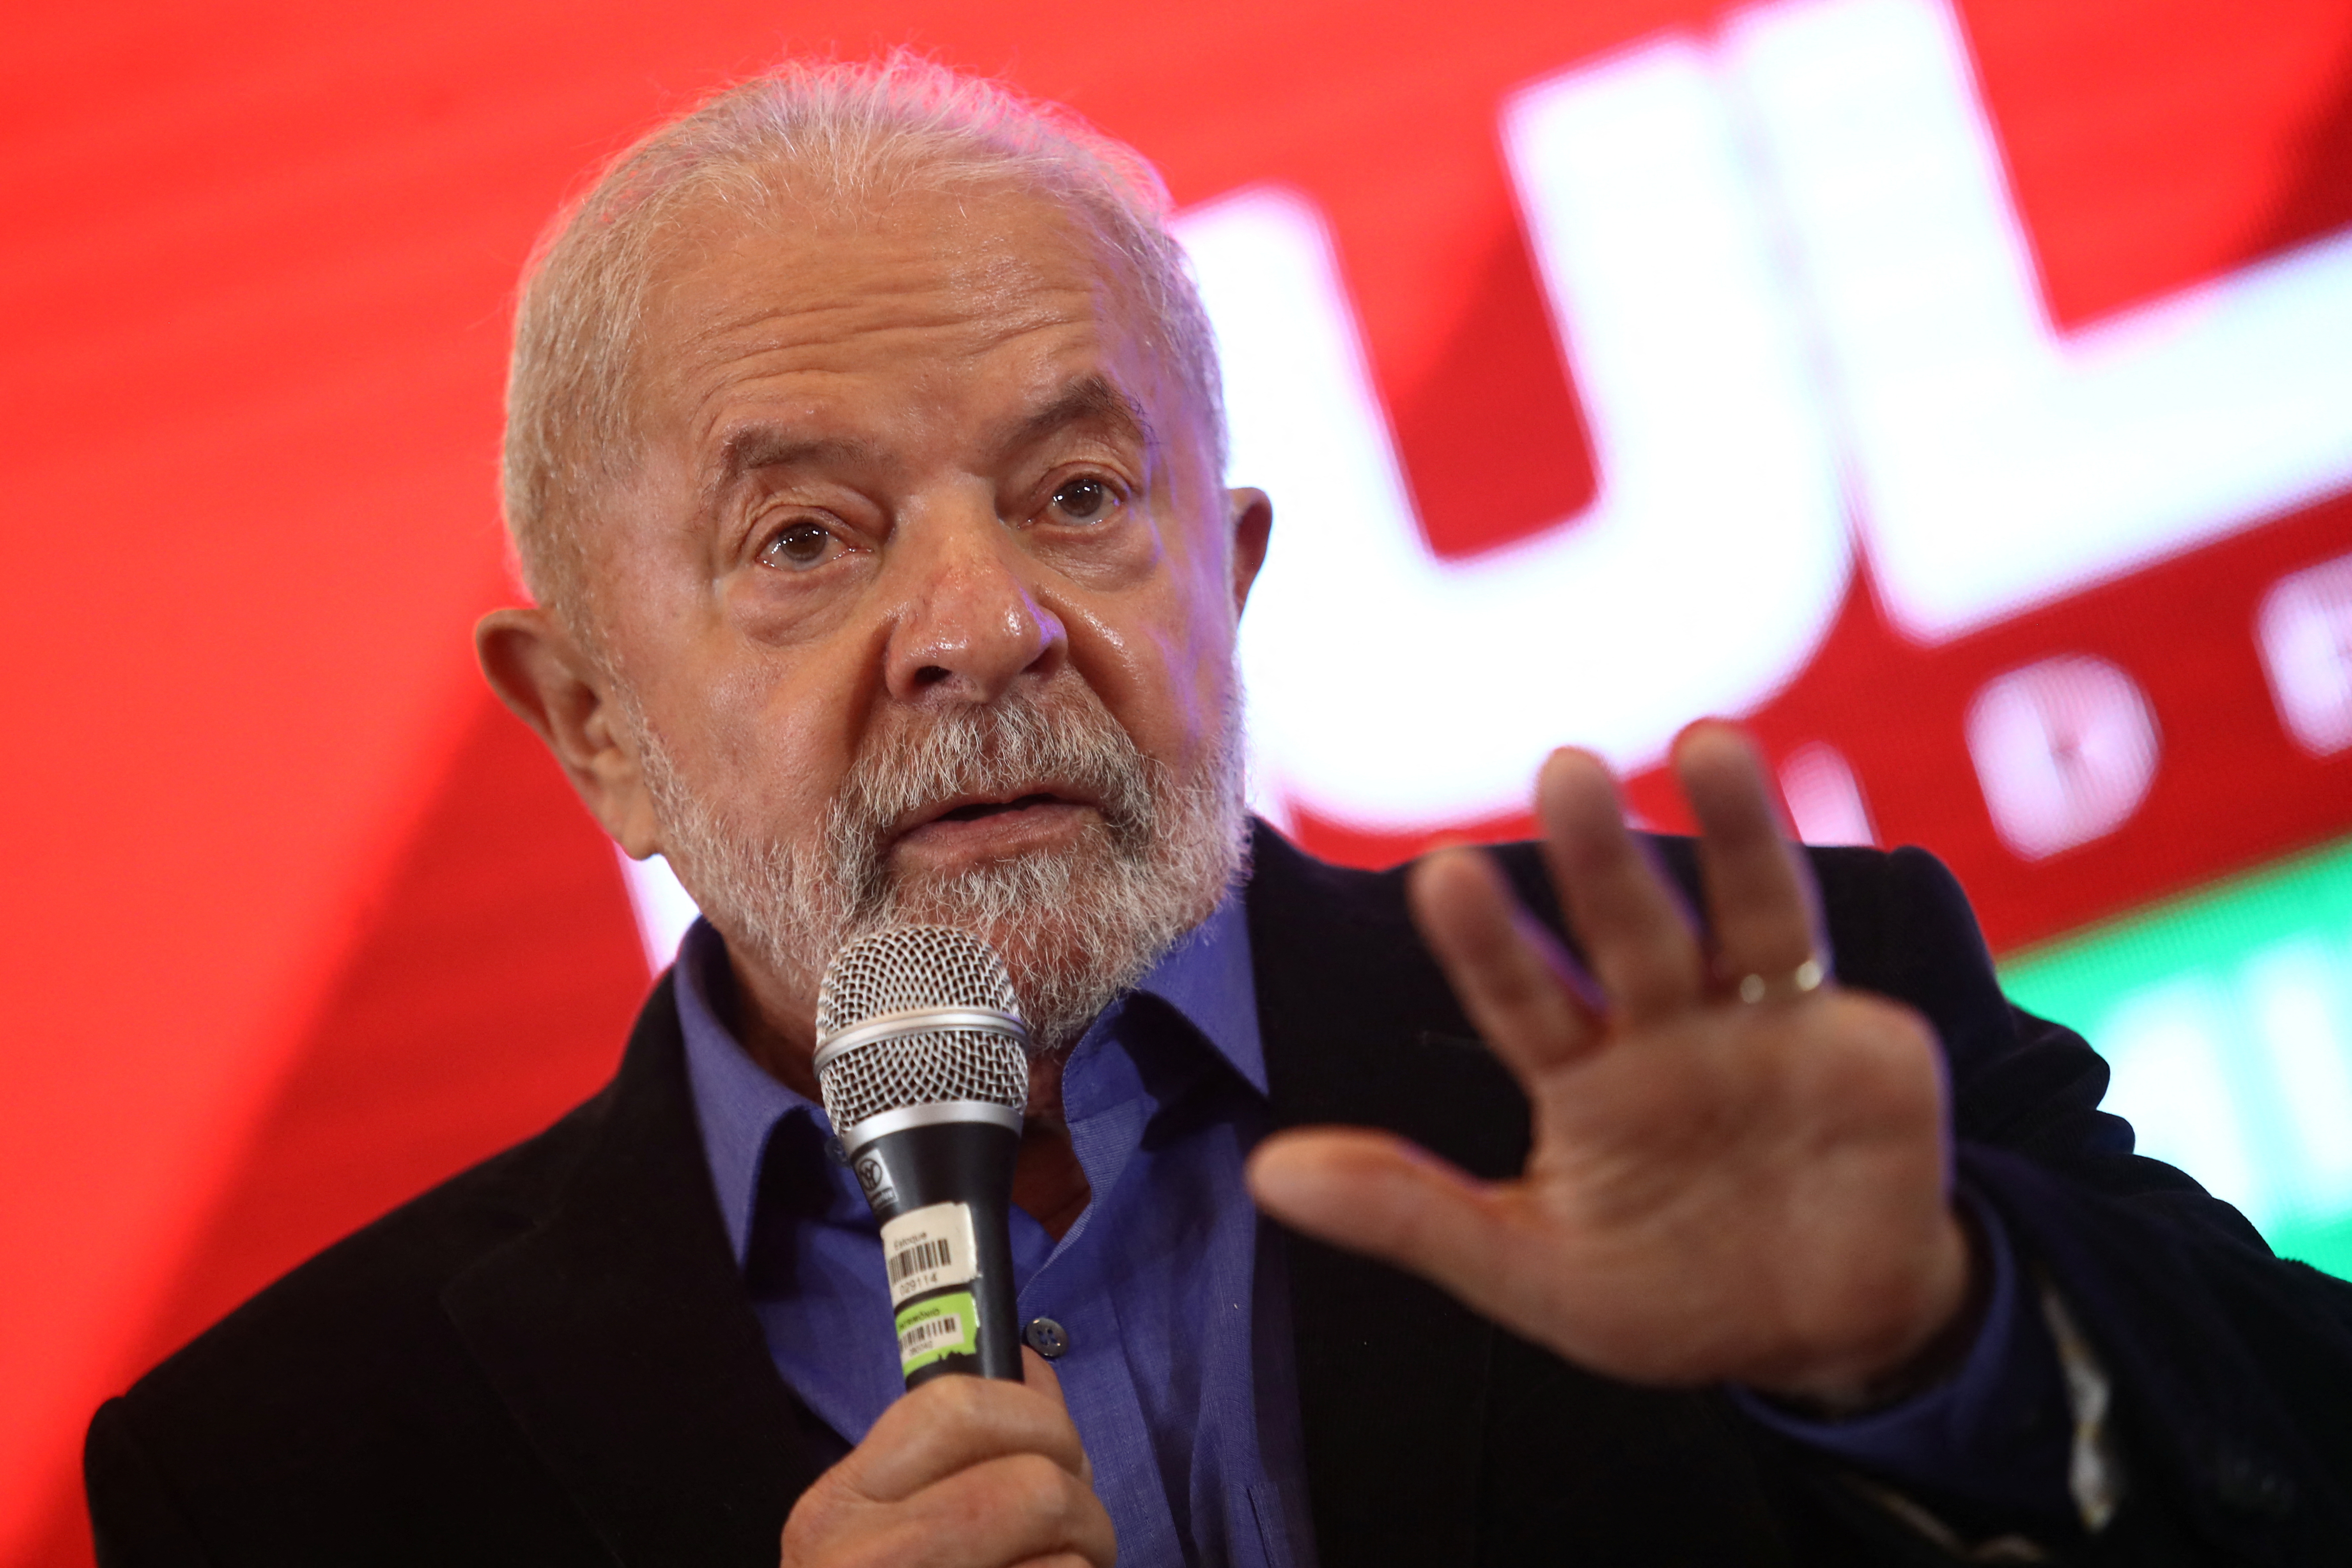 Brazil’s former president Luiz Inacio Lula da Silva in a meeting with sports representatives in Sao Paulo